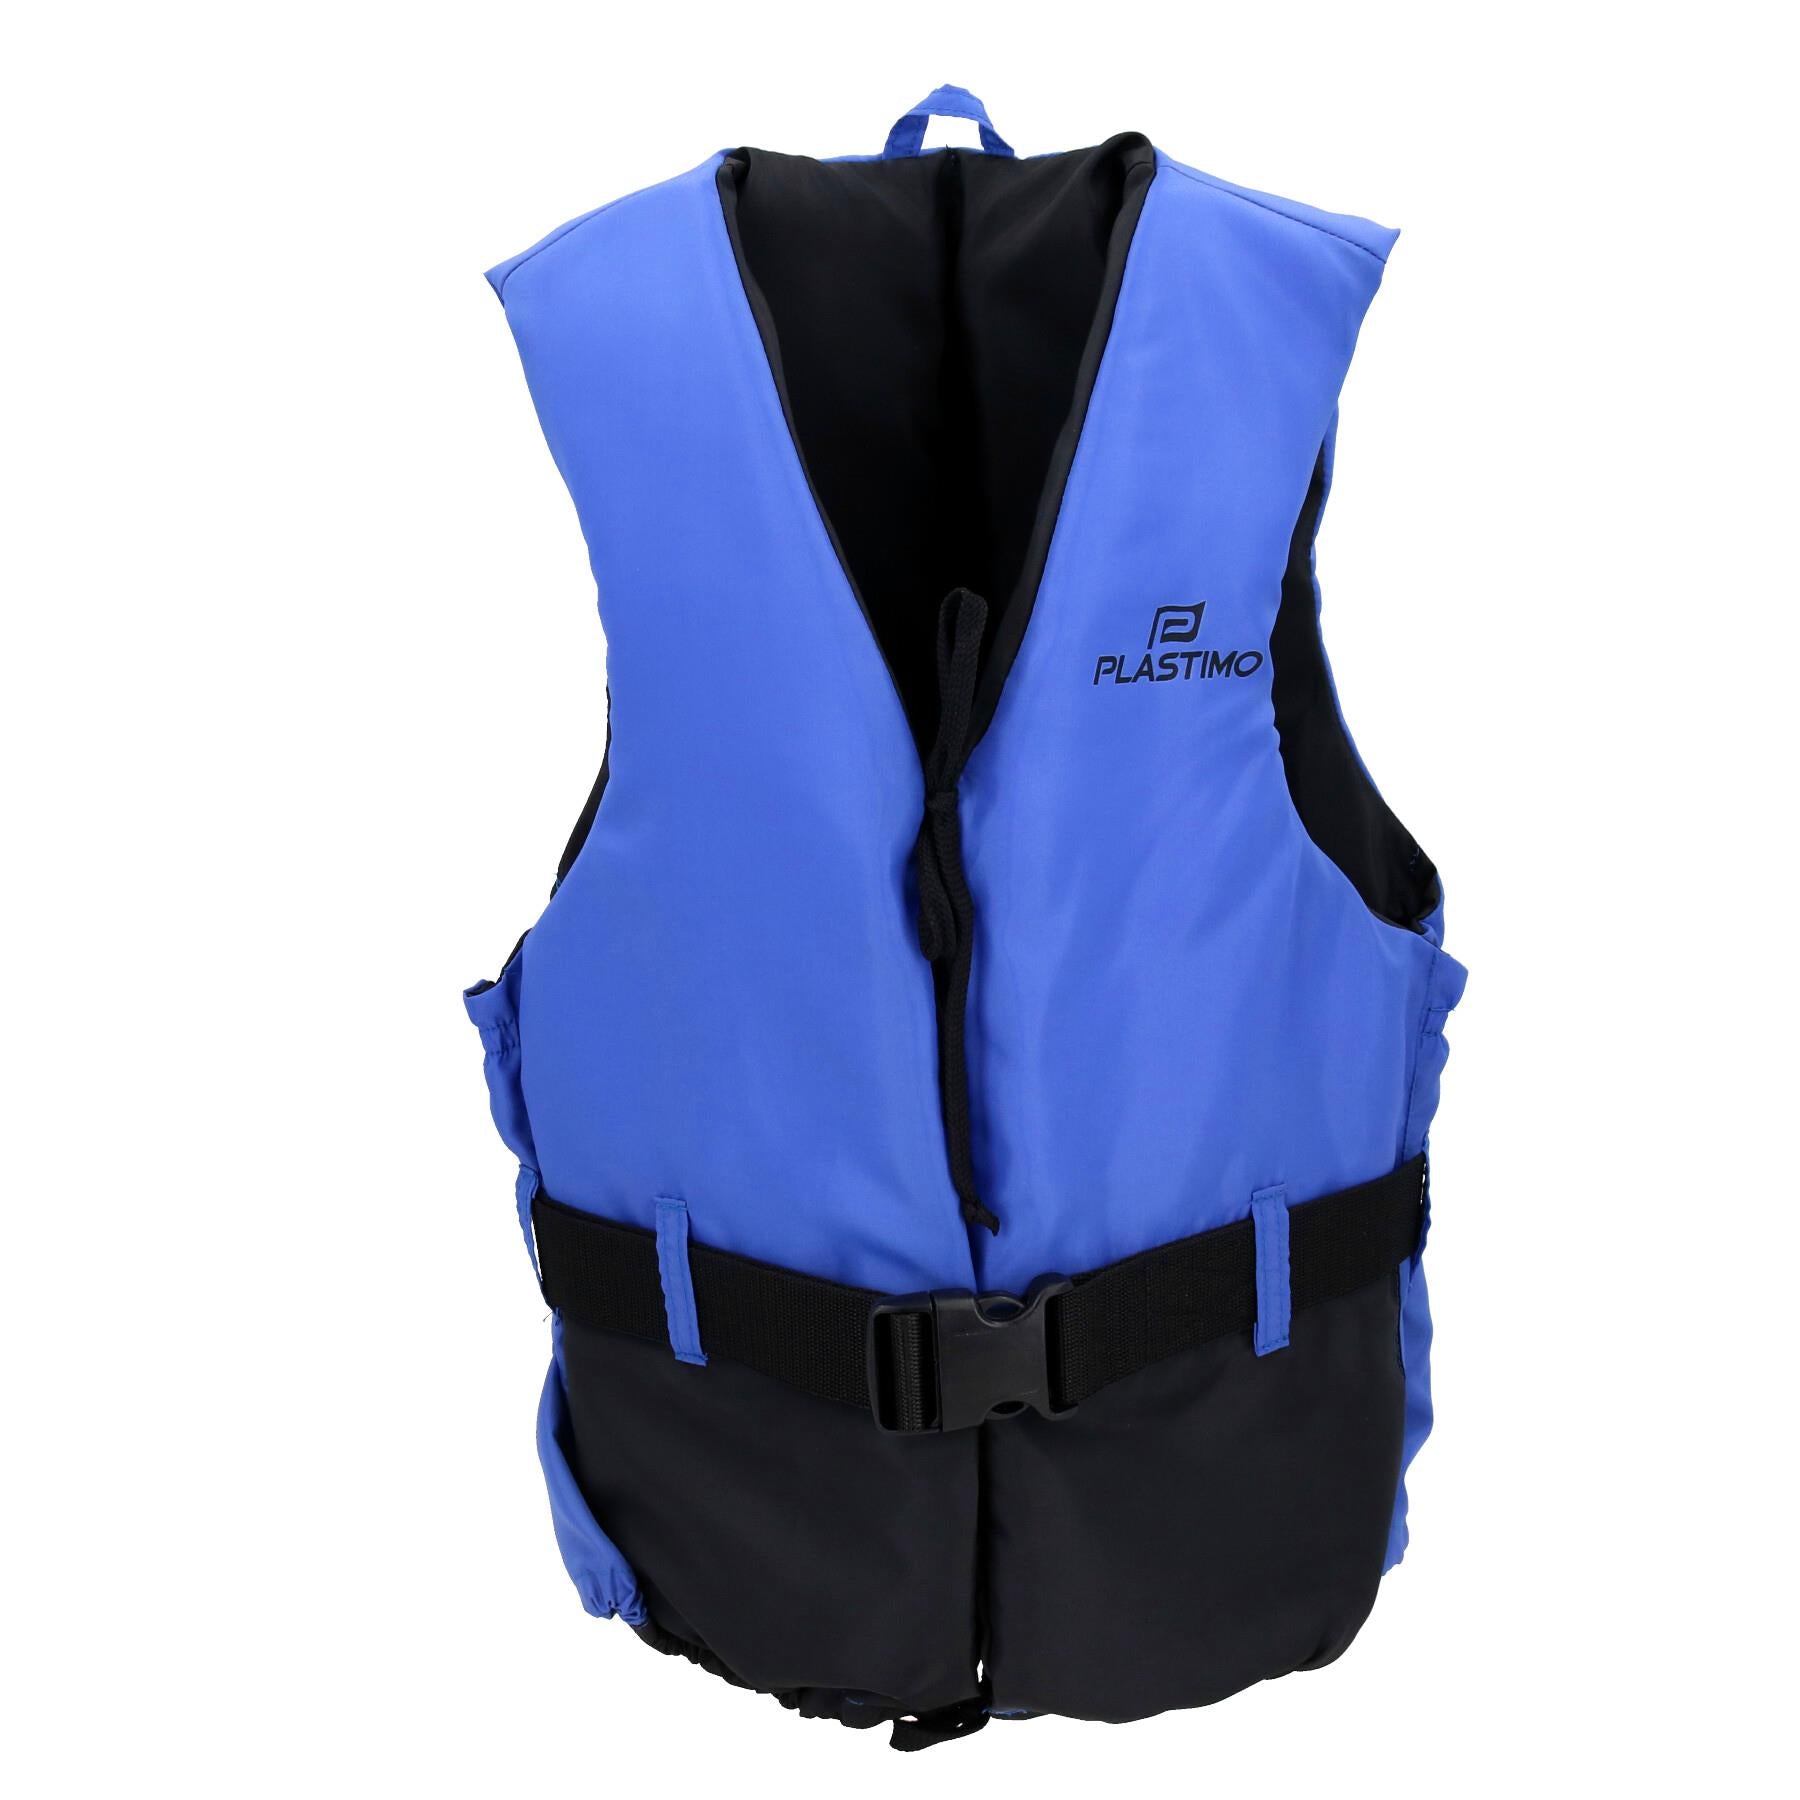 XL 90kg+ Adult Buoyancy Aid Plastimo Olympia 50N Personal Floatation Jacket Device